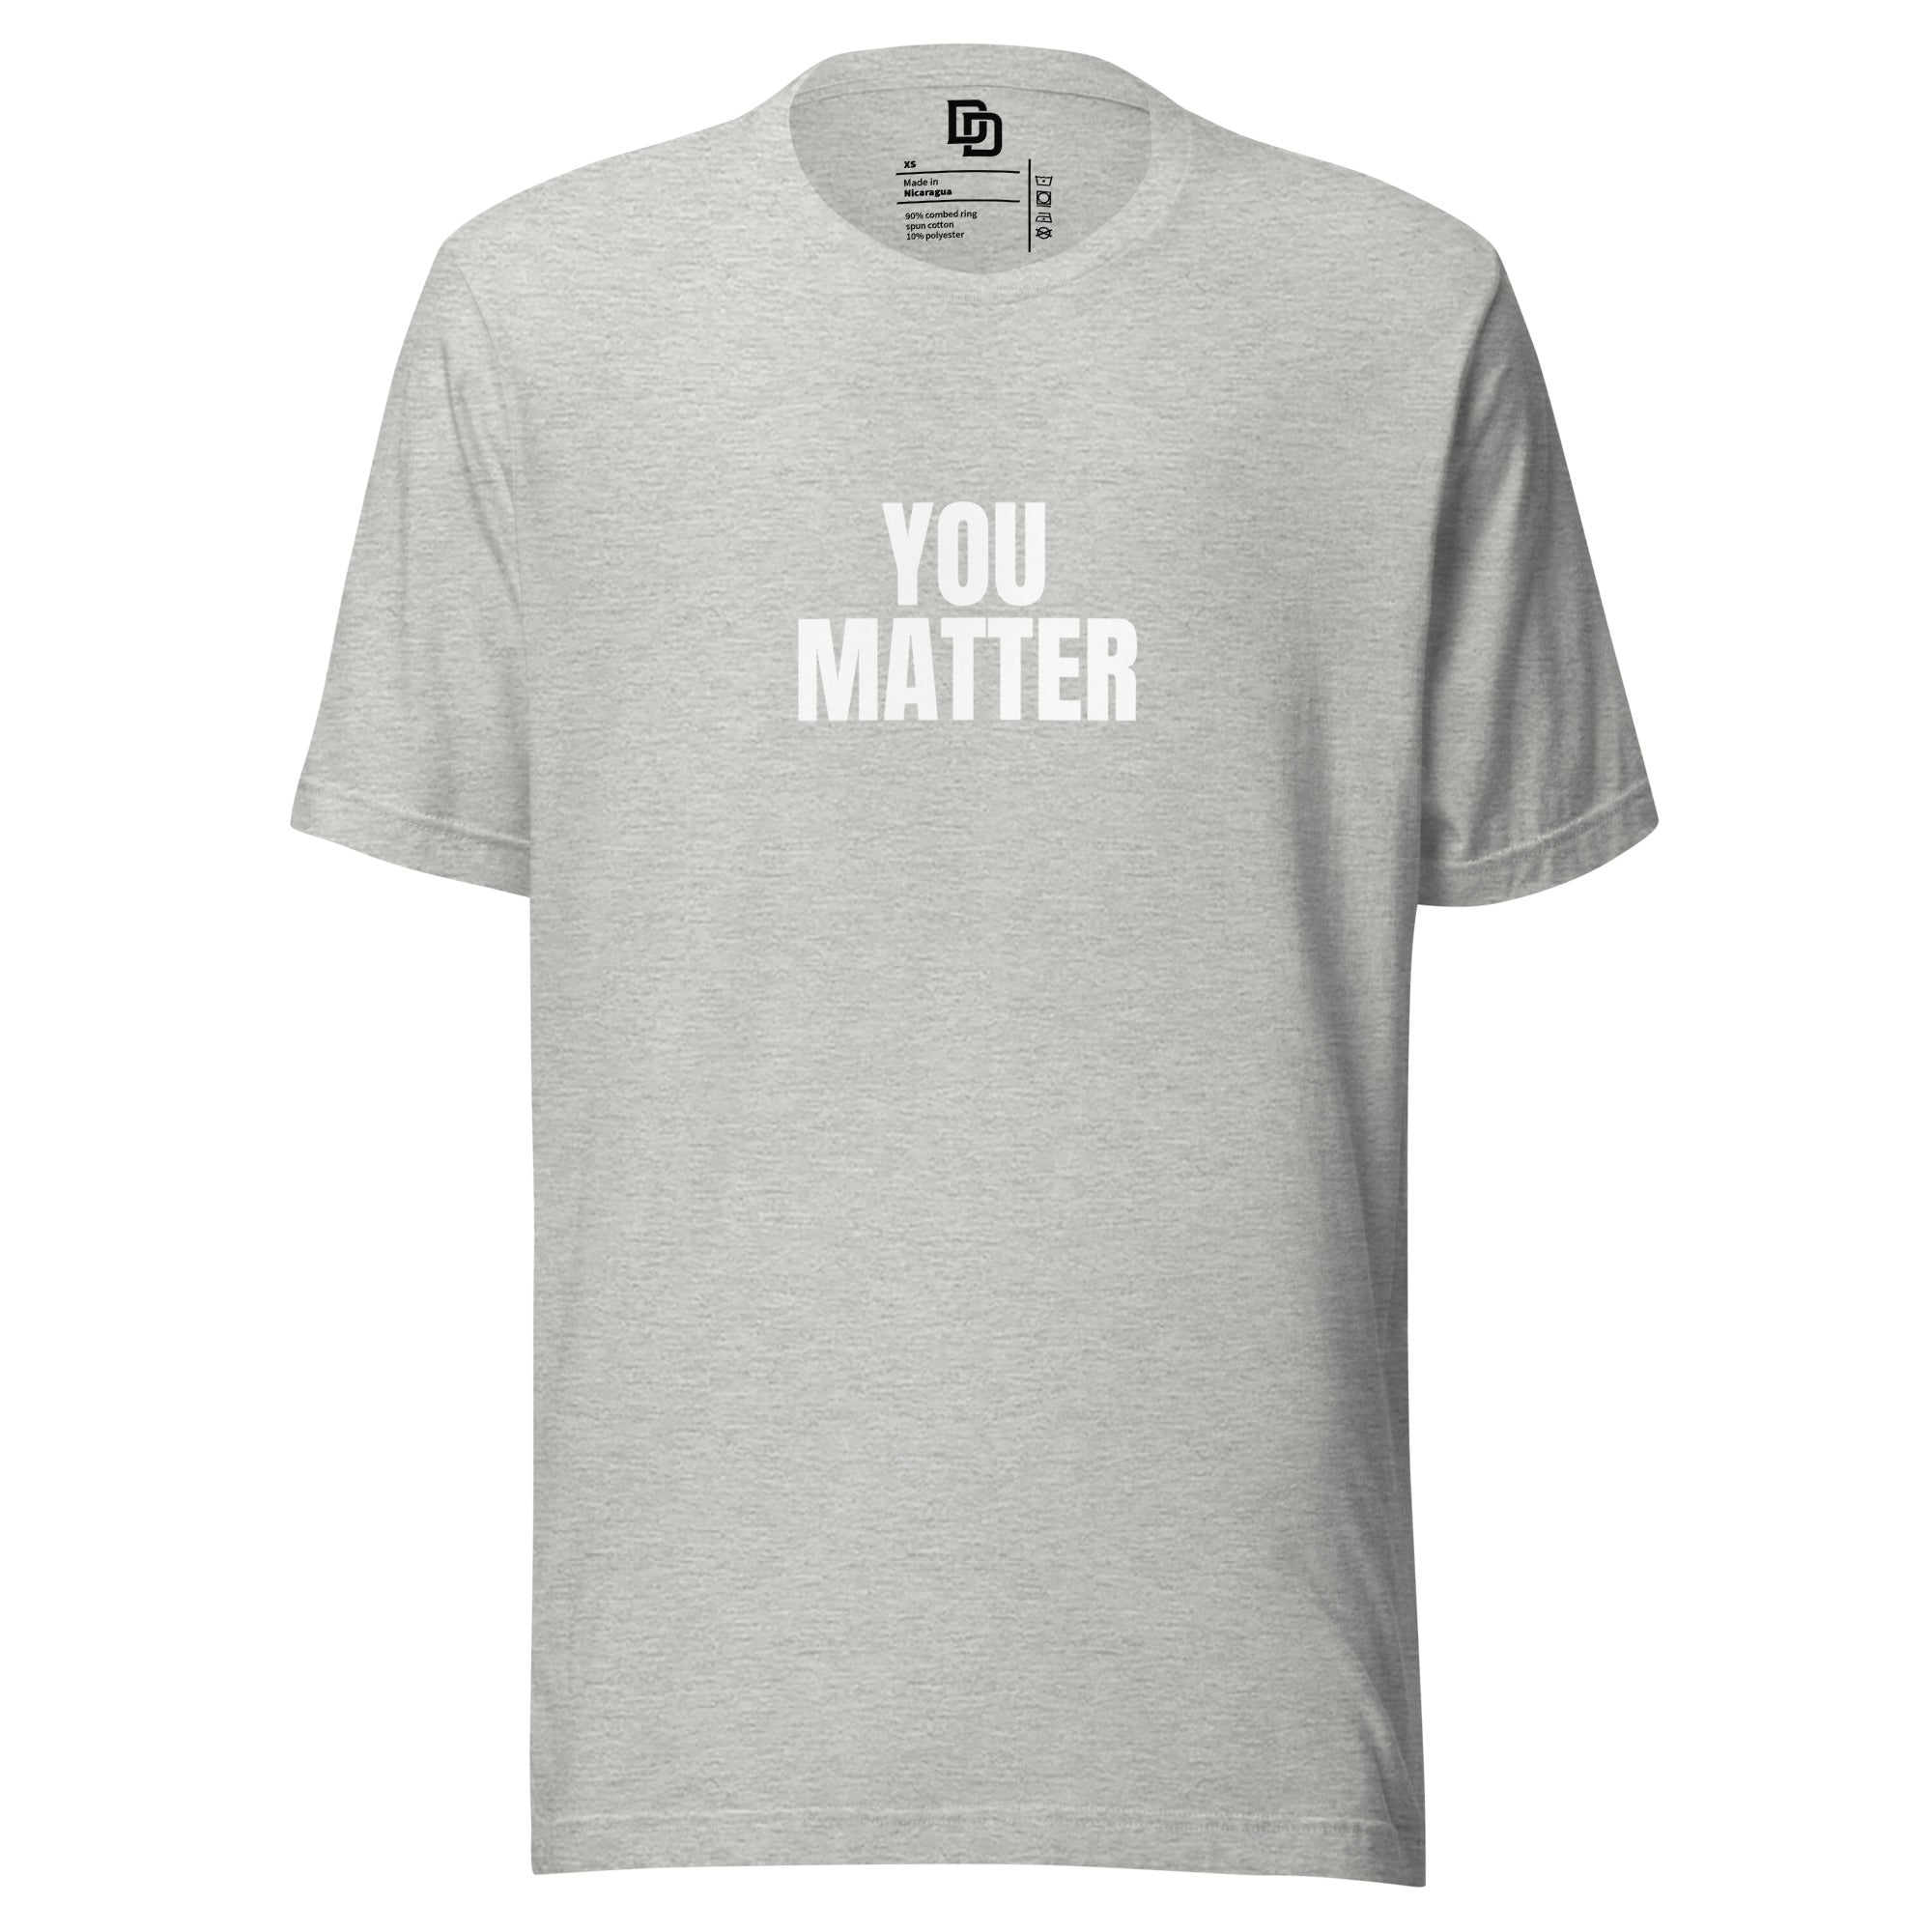 You Matter Version 2 Tee